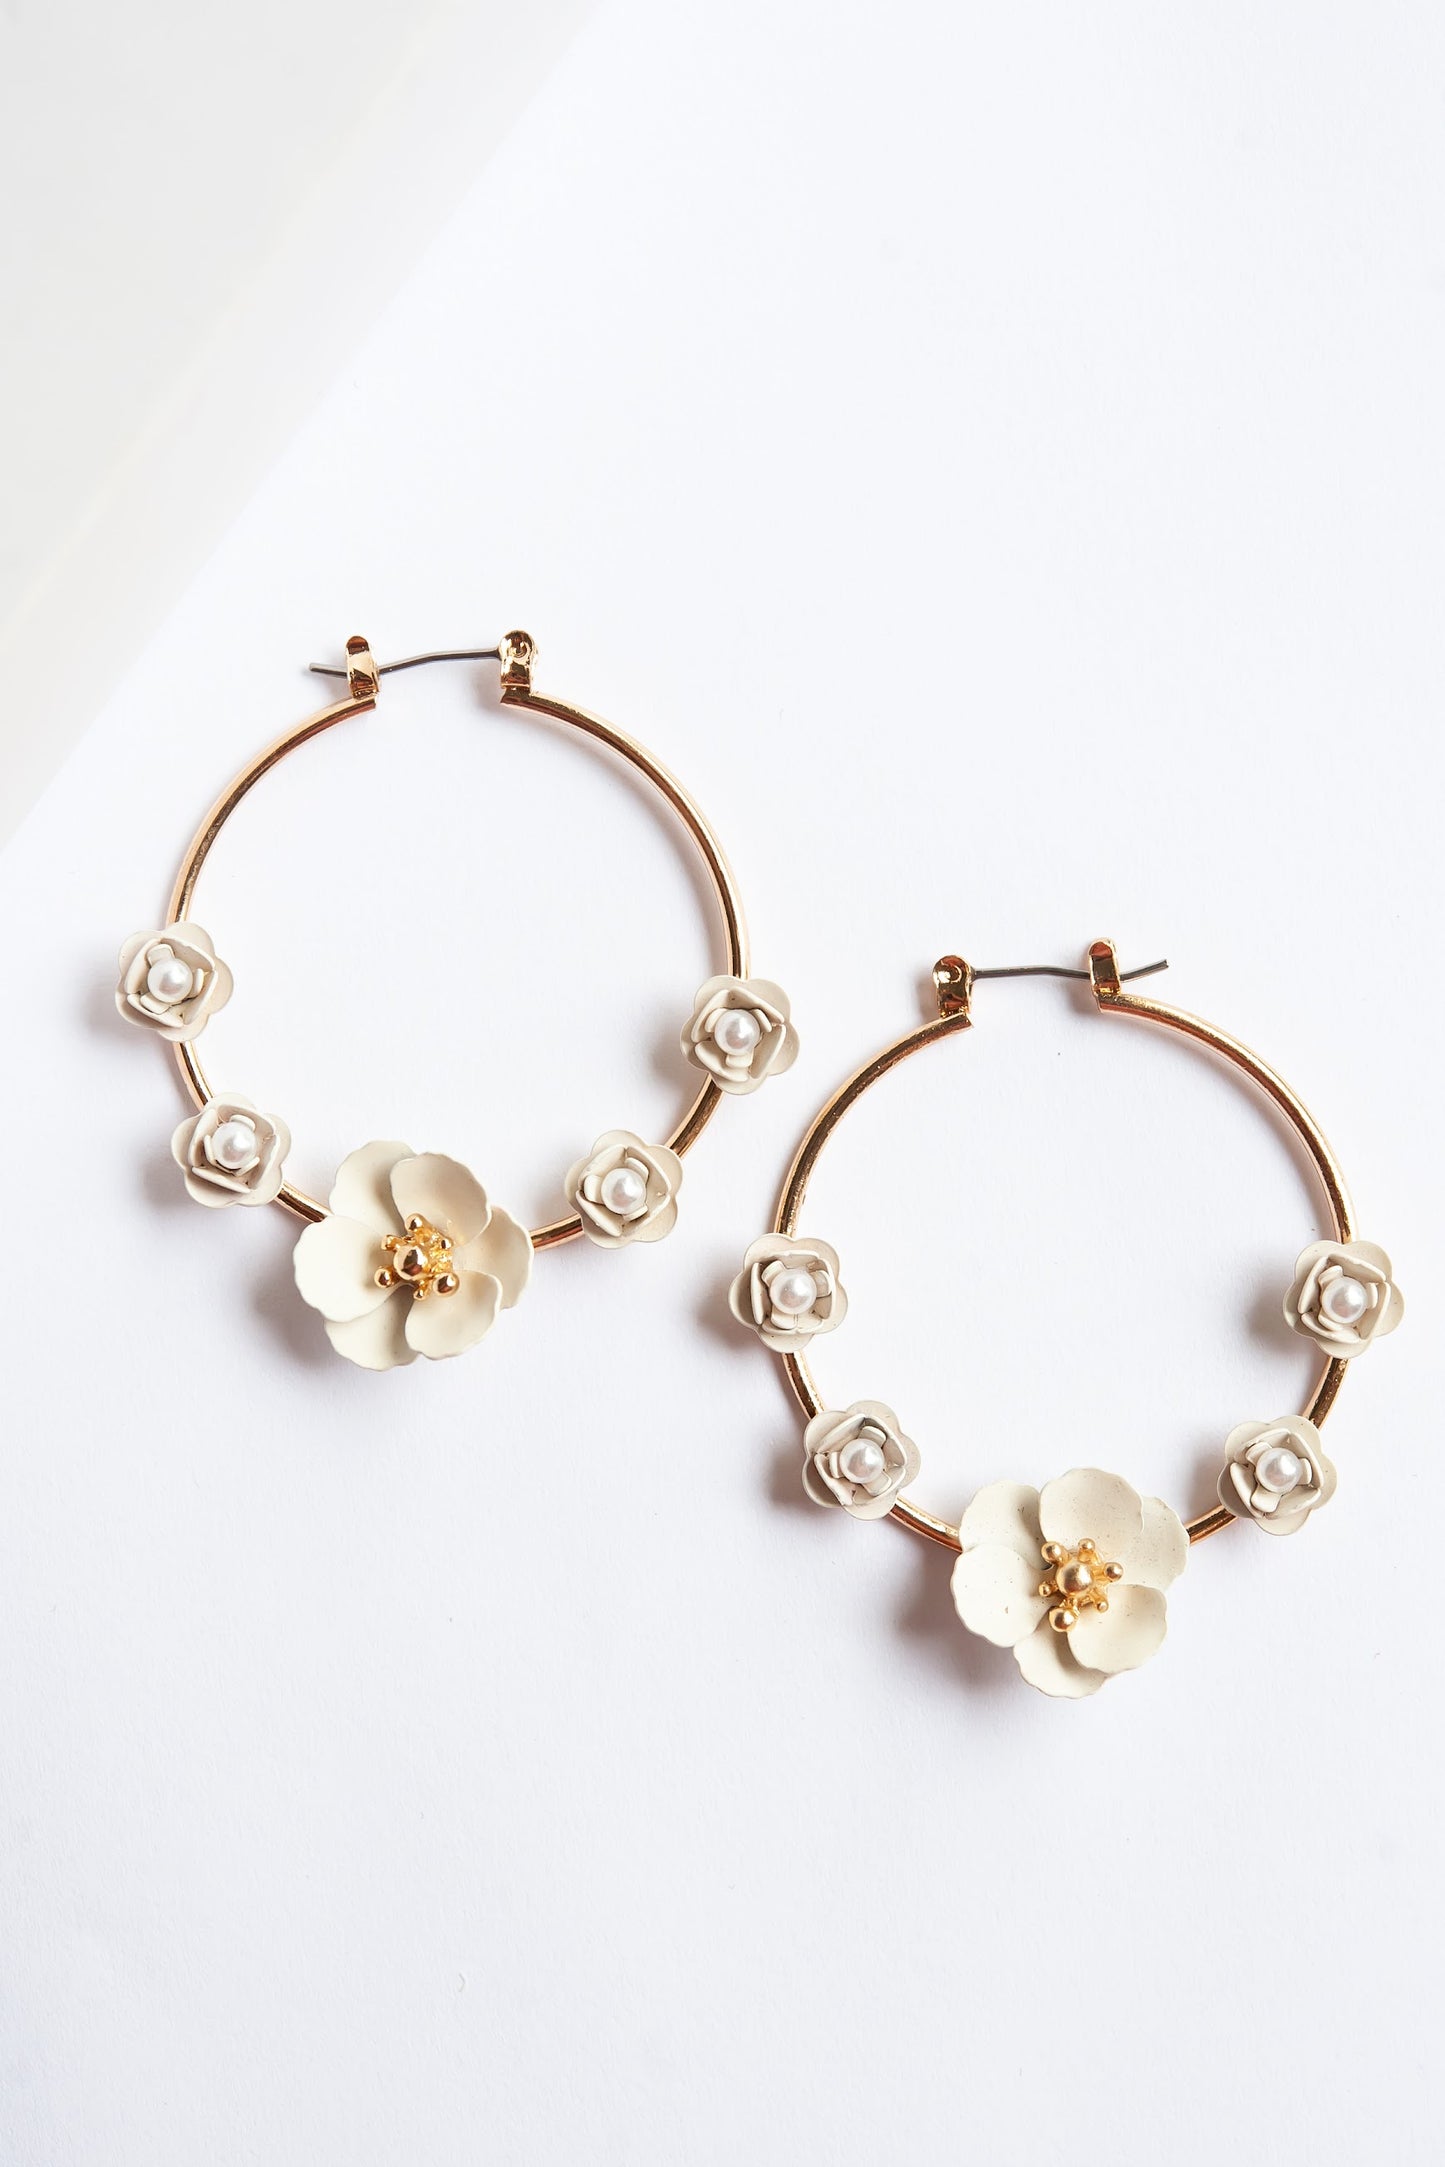 POLYMER CLAY Flower Earrings. Handmade Floral Hoops Earring. Whimsical Floral  Earrings. Statement Floral Earrings. Pink Earrings. - Etsy India